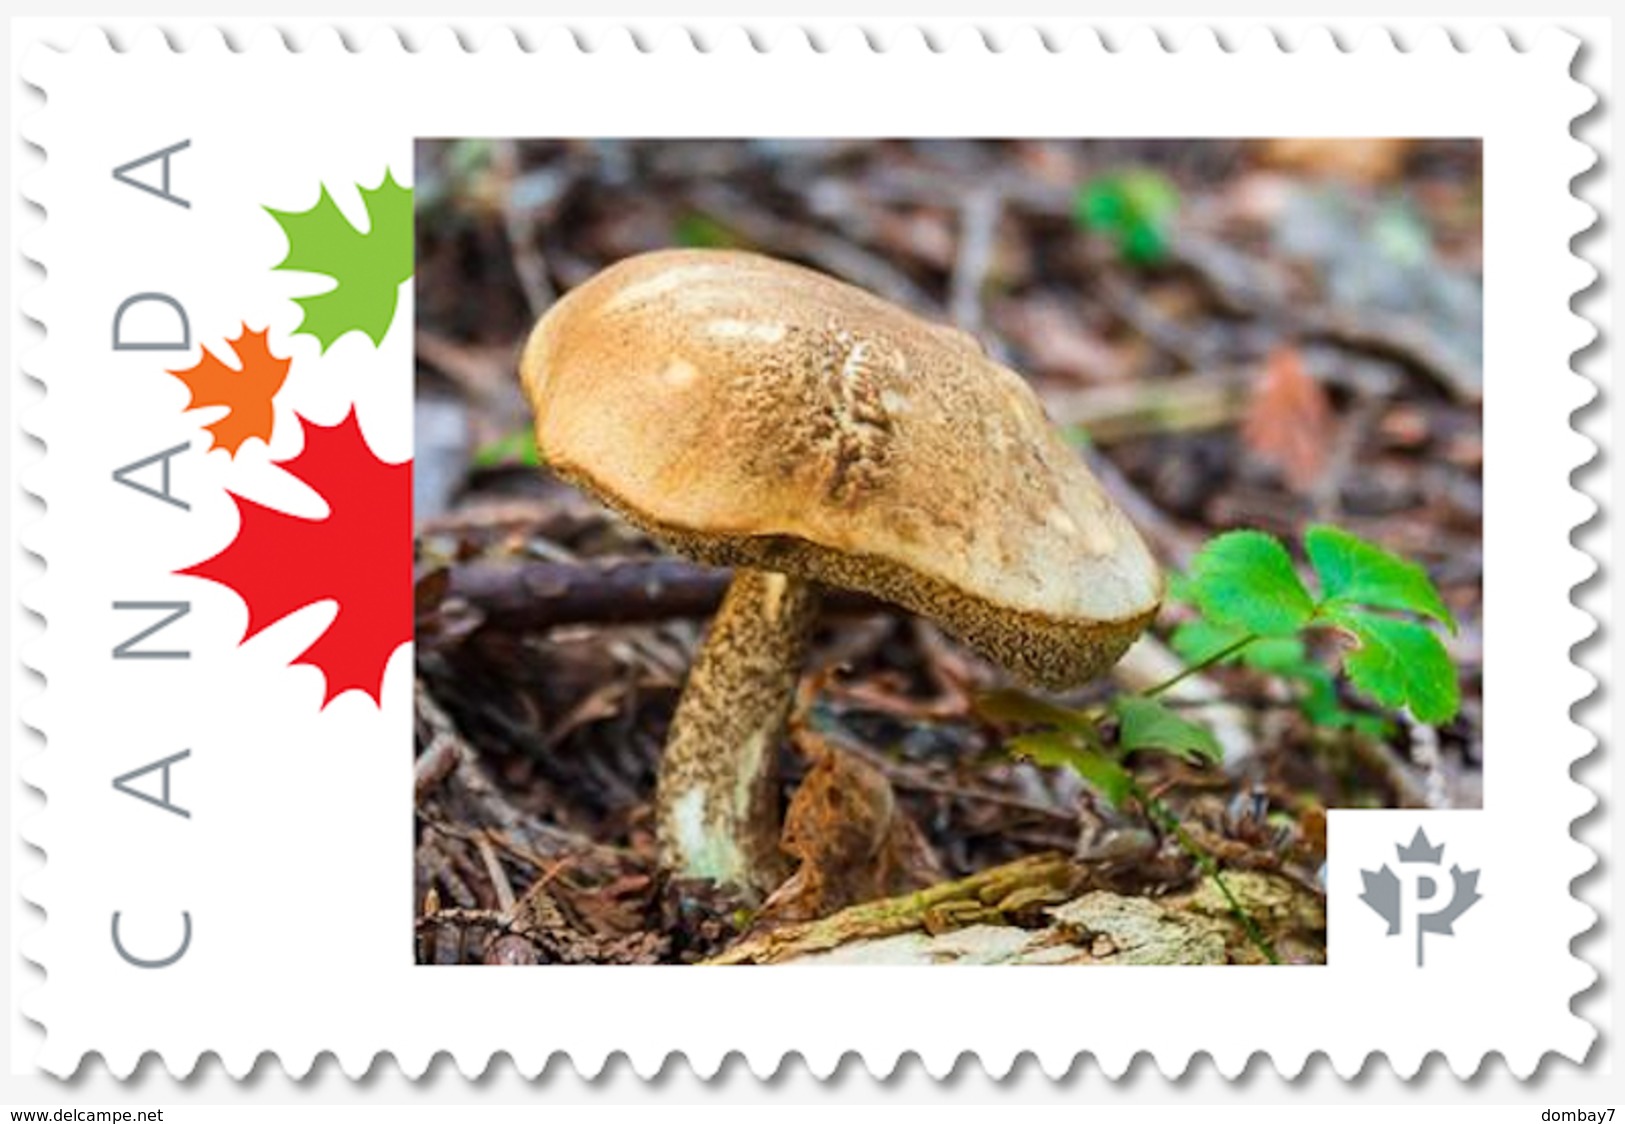 NEW!  MUSHROOM  - Unique Picture Postage Stamp MNH Canada 2018 P18-01sn09 - Mushrooms